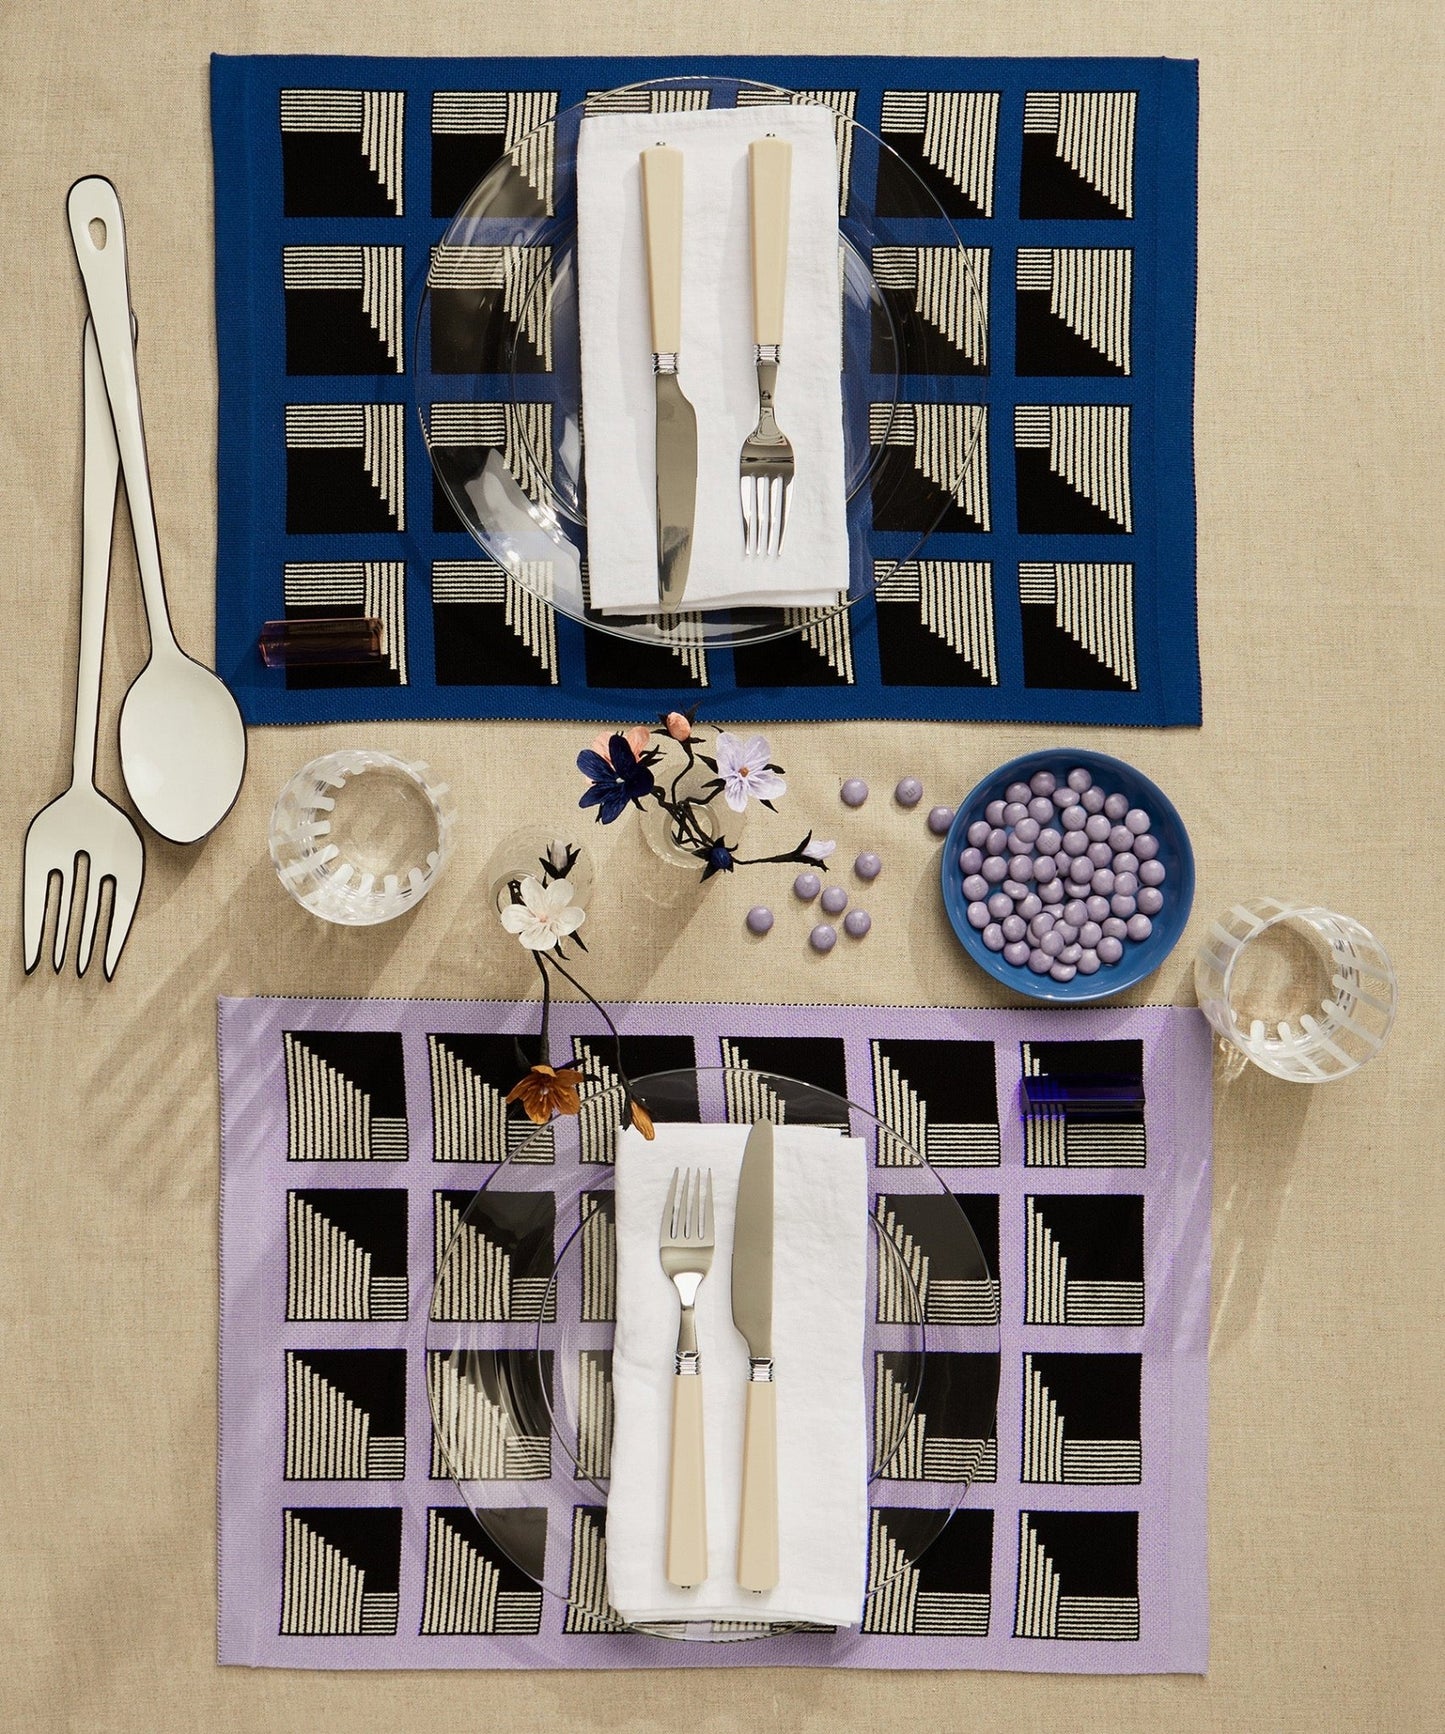 Placemat Knitted Jacquard - Blue lavender gift set - Ambar Homeware - Camille Walala